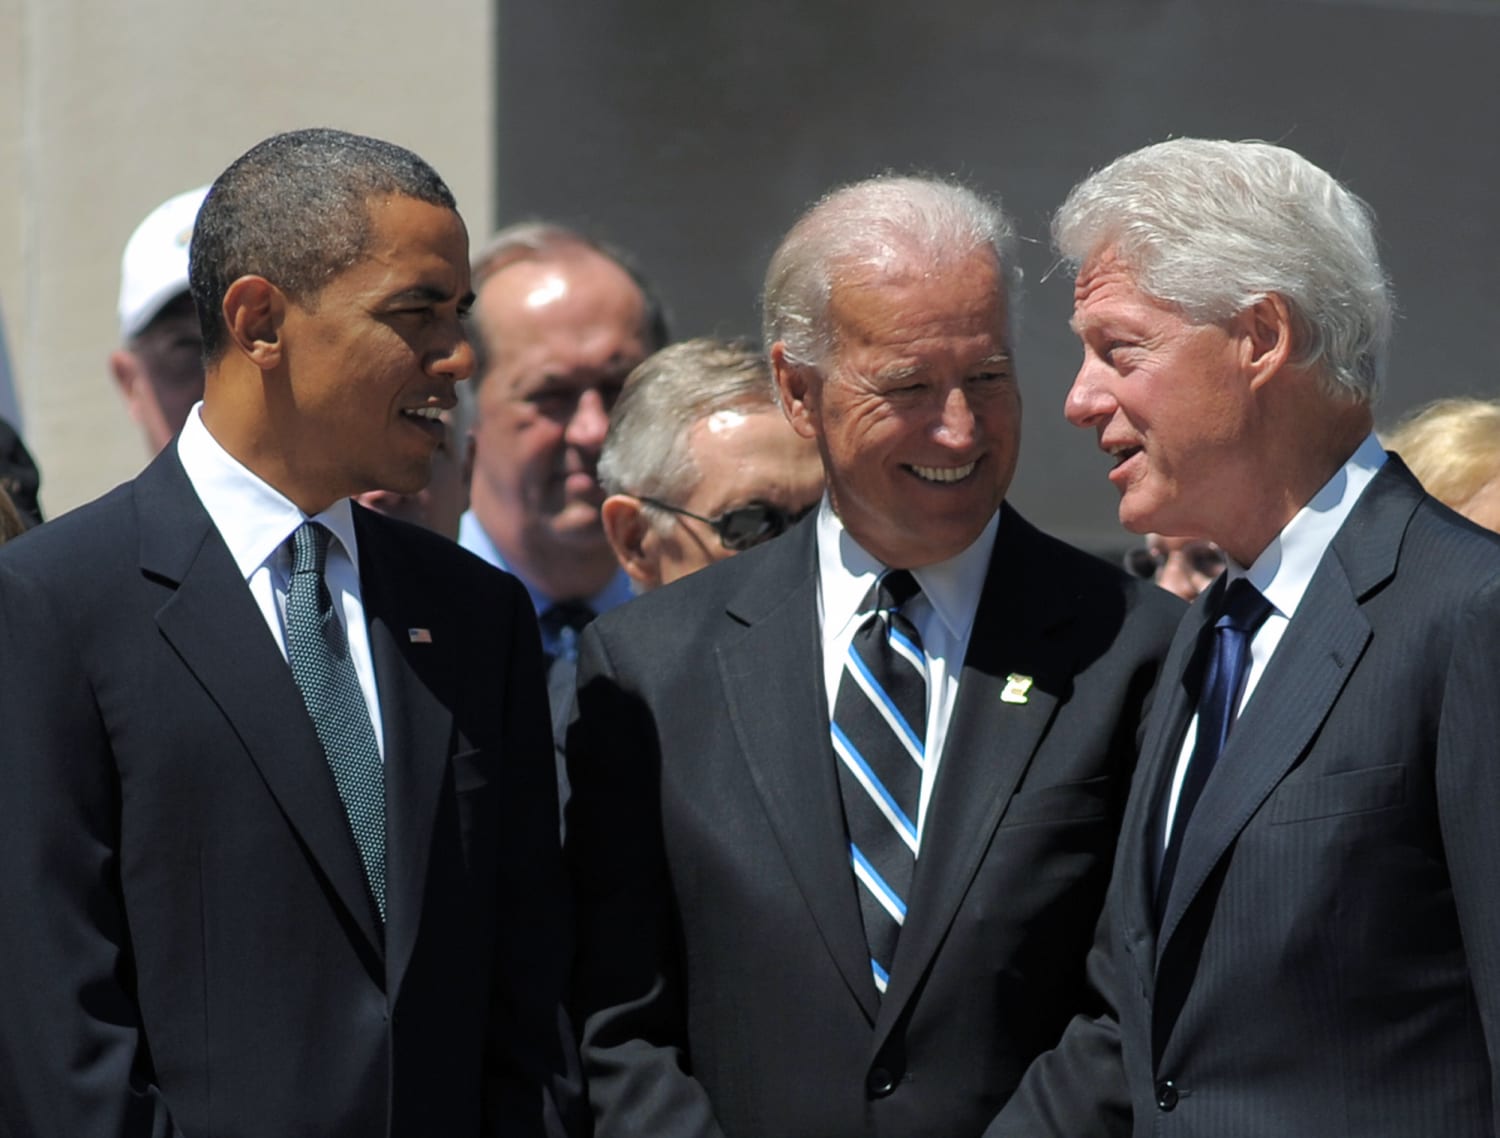 President Biden, former President Obama, and Bill Clinton lead fundraiser (Credits: NBC News)